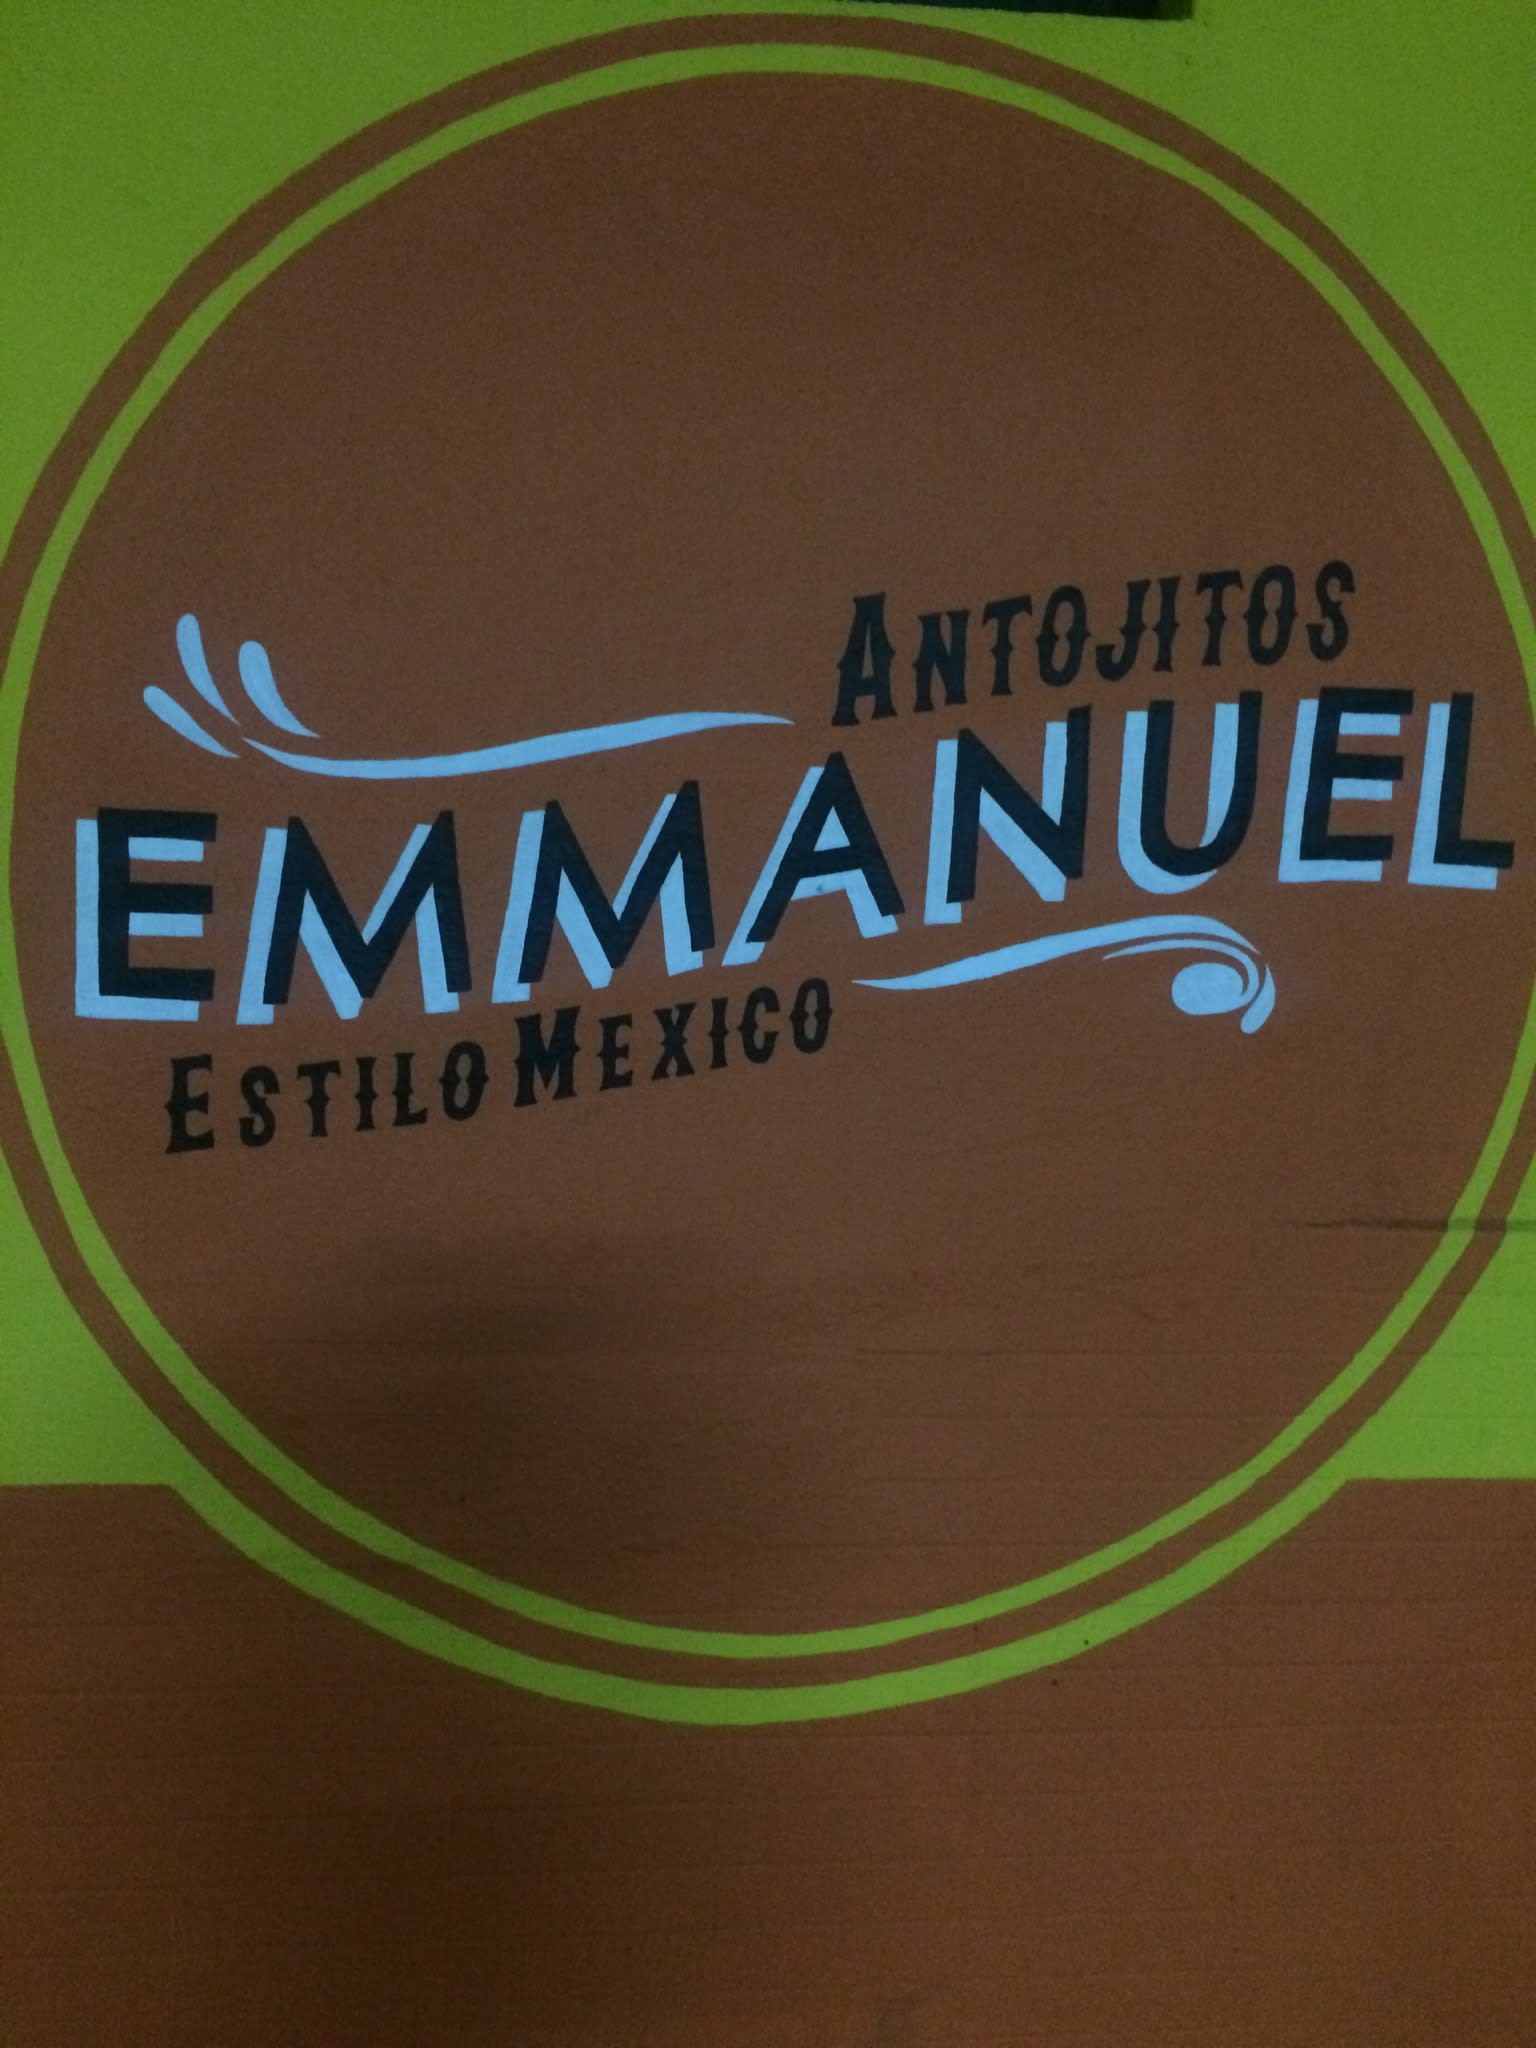 Antojitos Emmanuel Estilo México